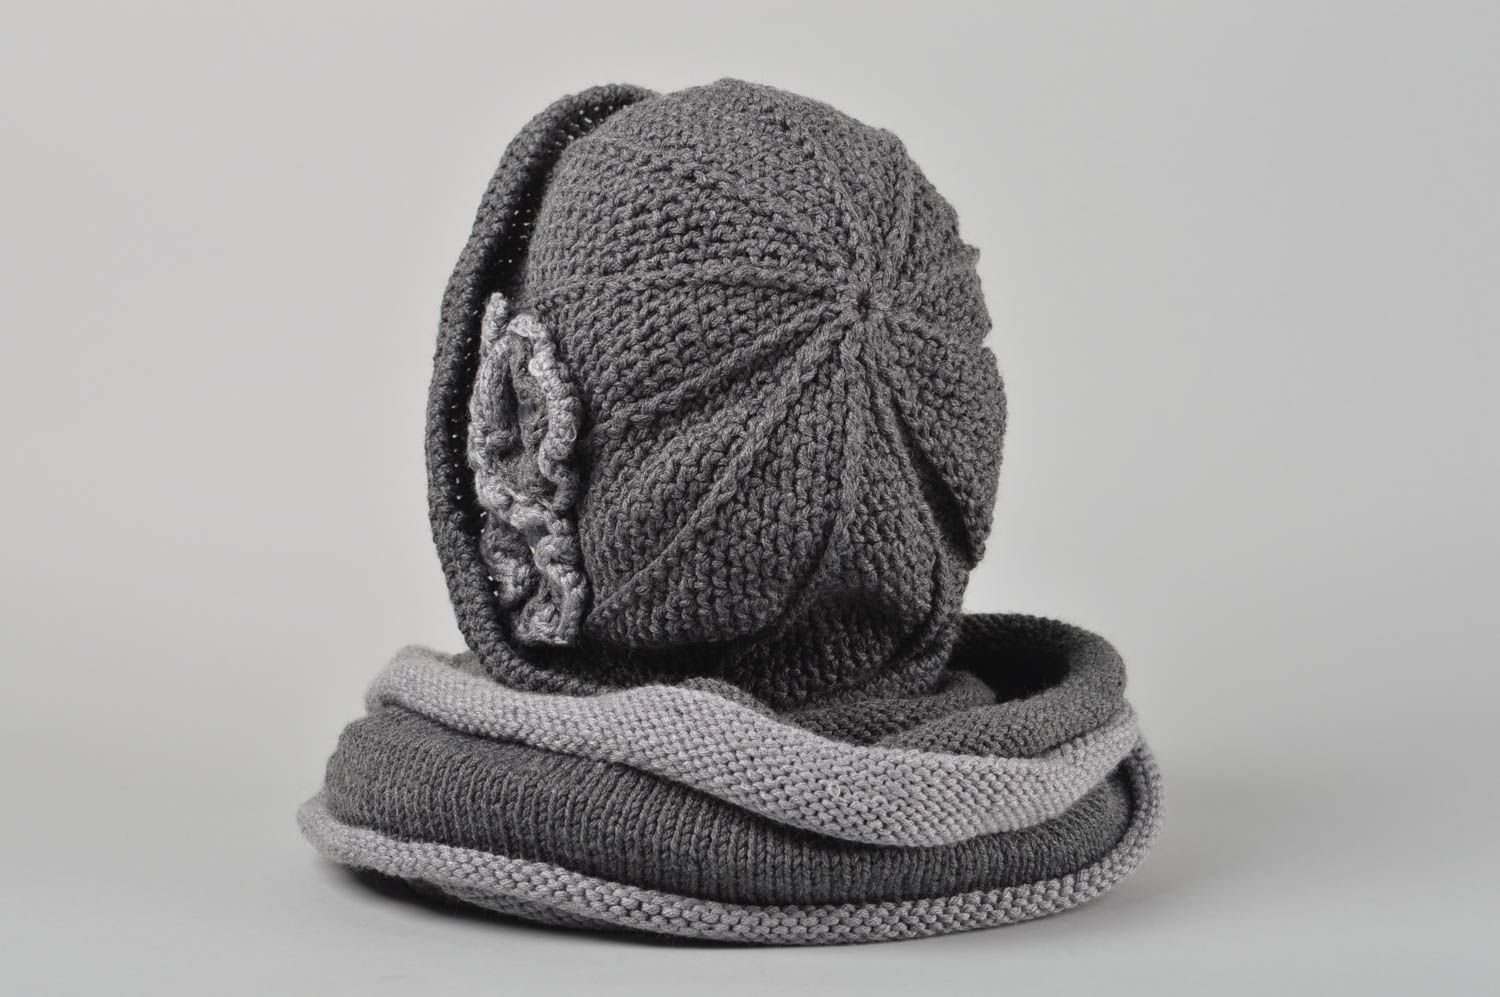 Handmade designer crocheted hat crochet scarf winter accessories for women photo 5